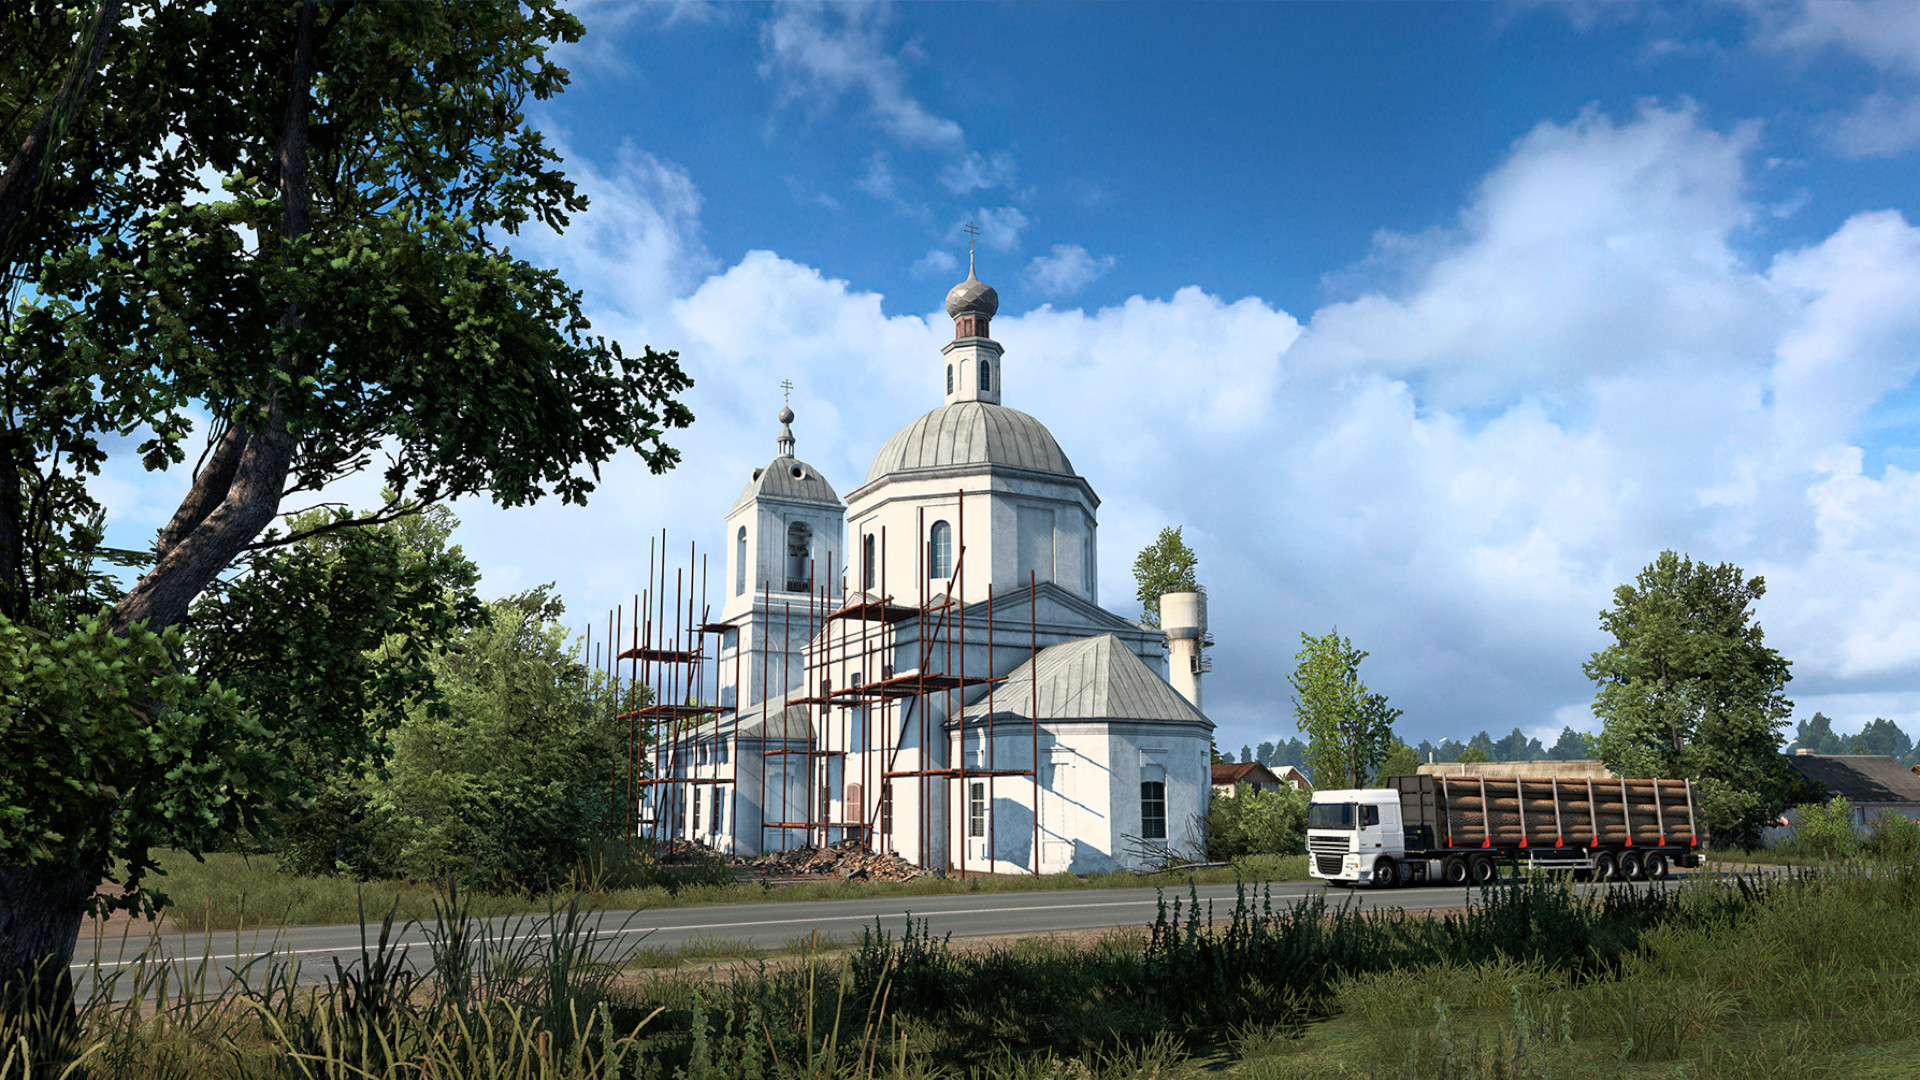 Euro Truck Simulator 2 goes to church